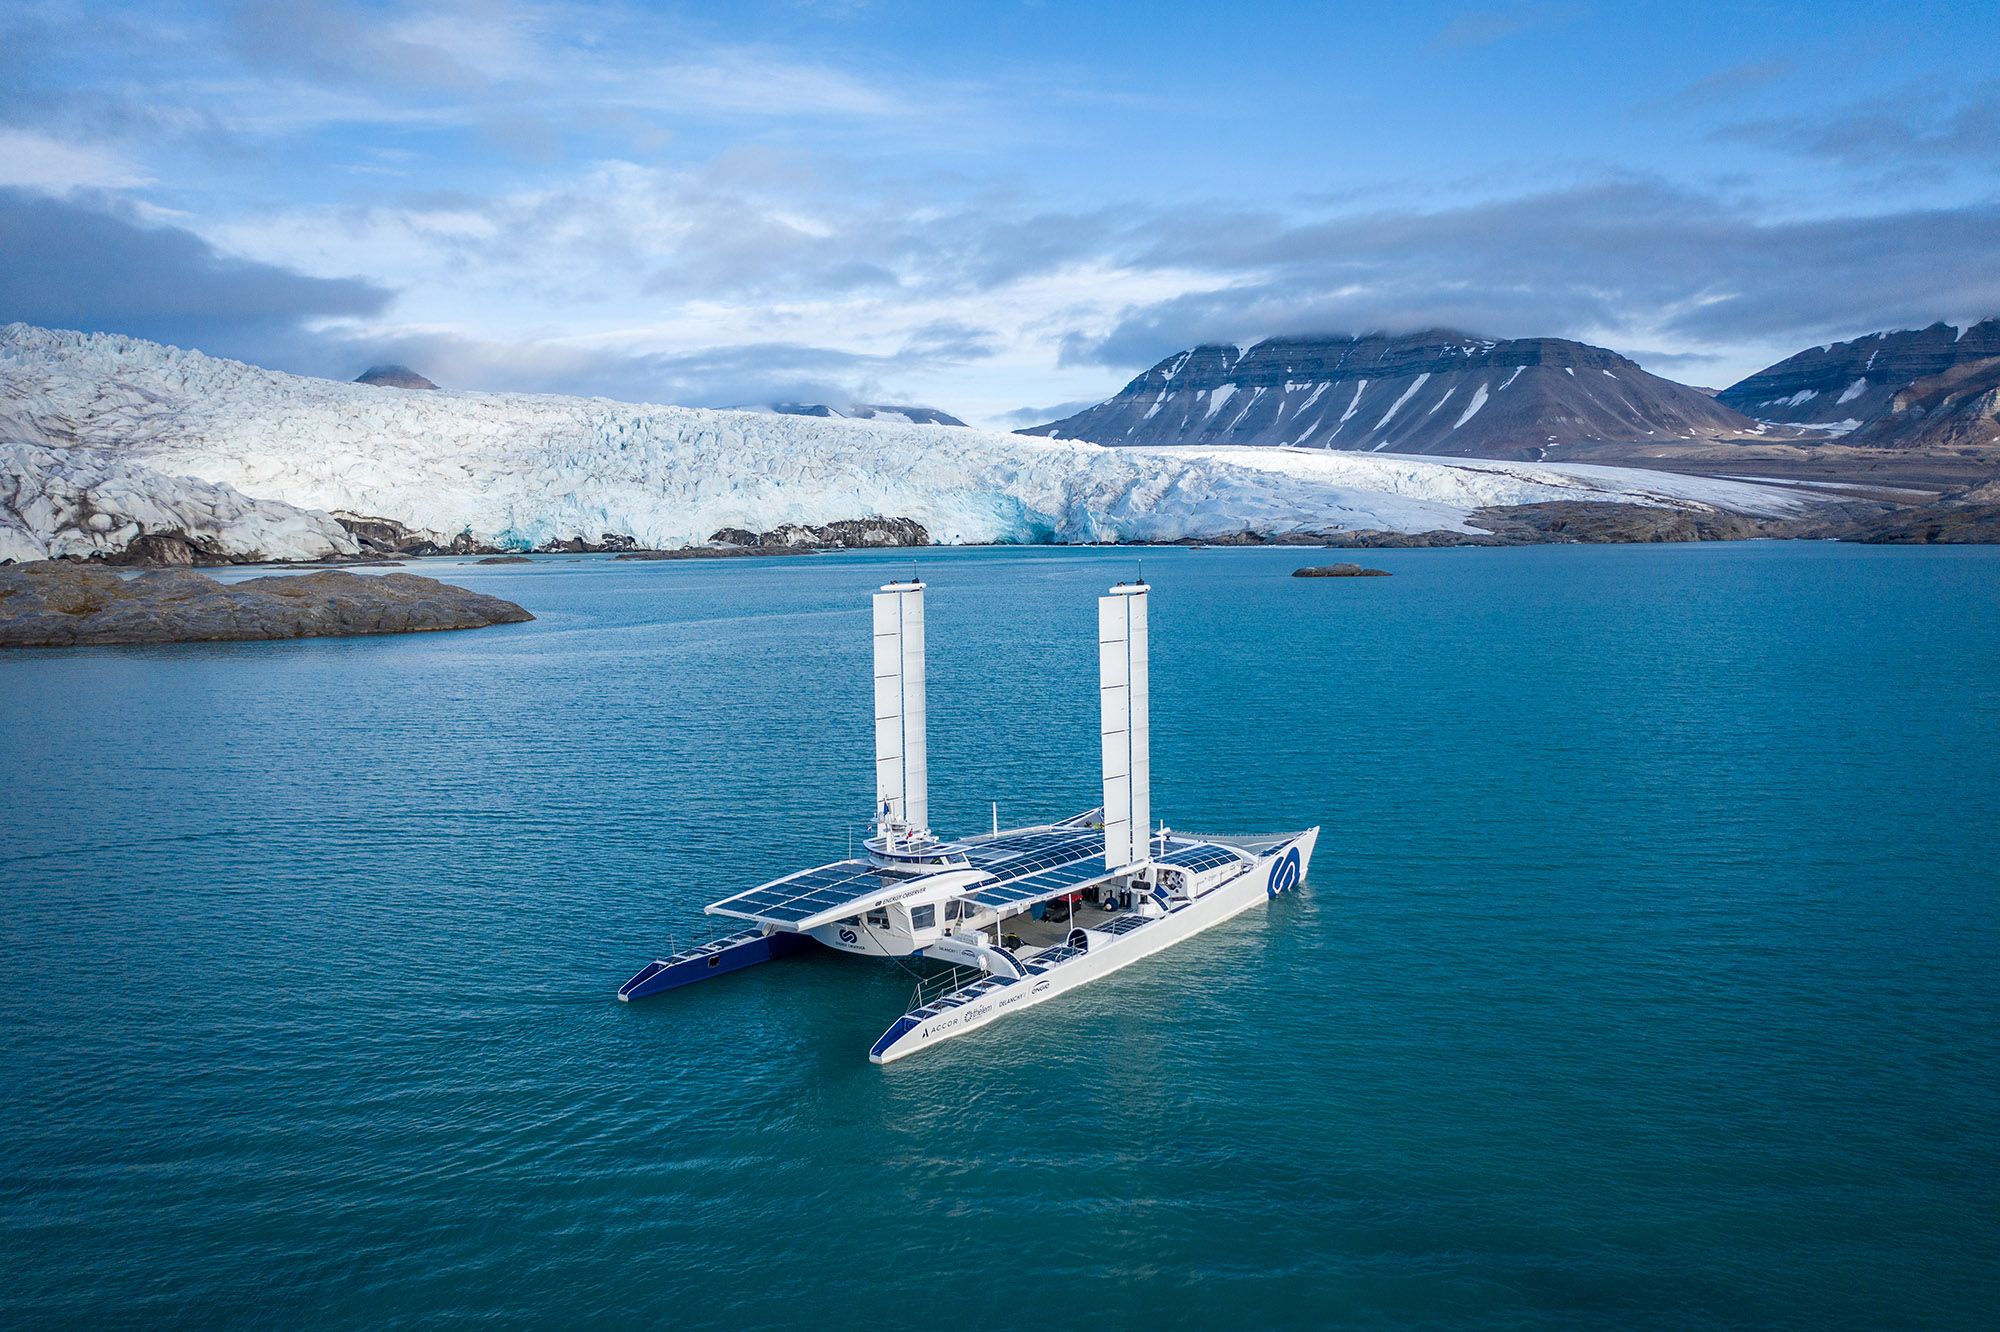 Energy Observer's Catamaran- driven by renewables!